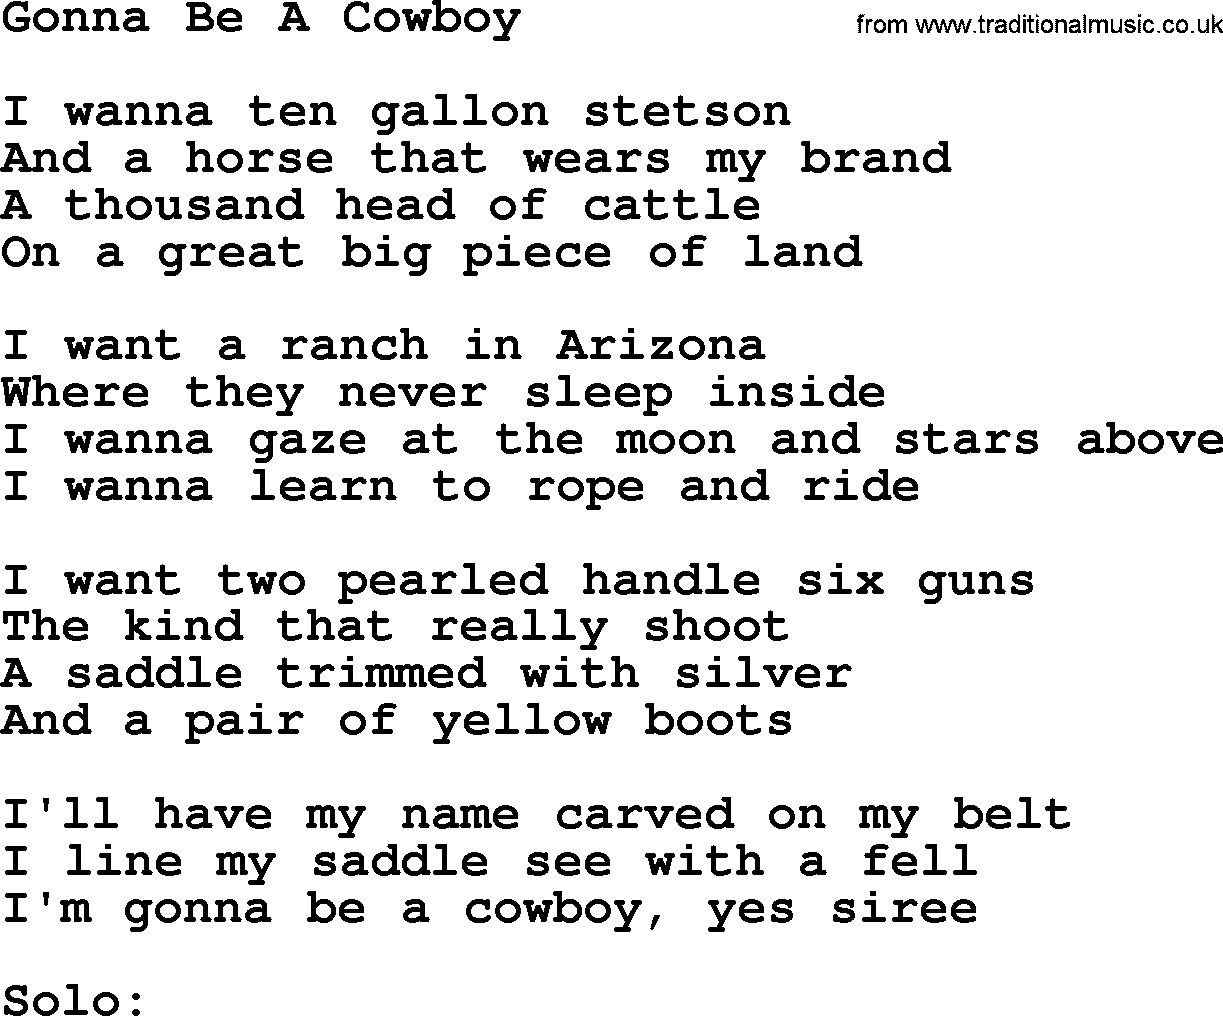 Marty Robbins song: Gonna Be A Cowboy, lyrics